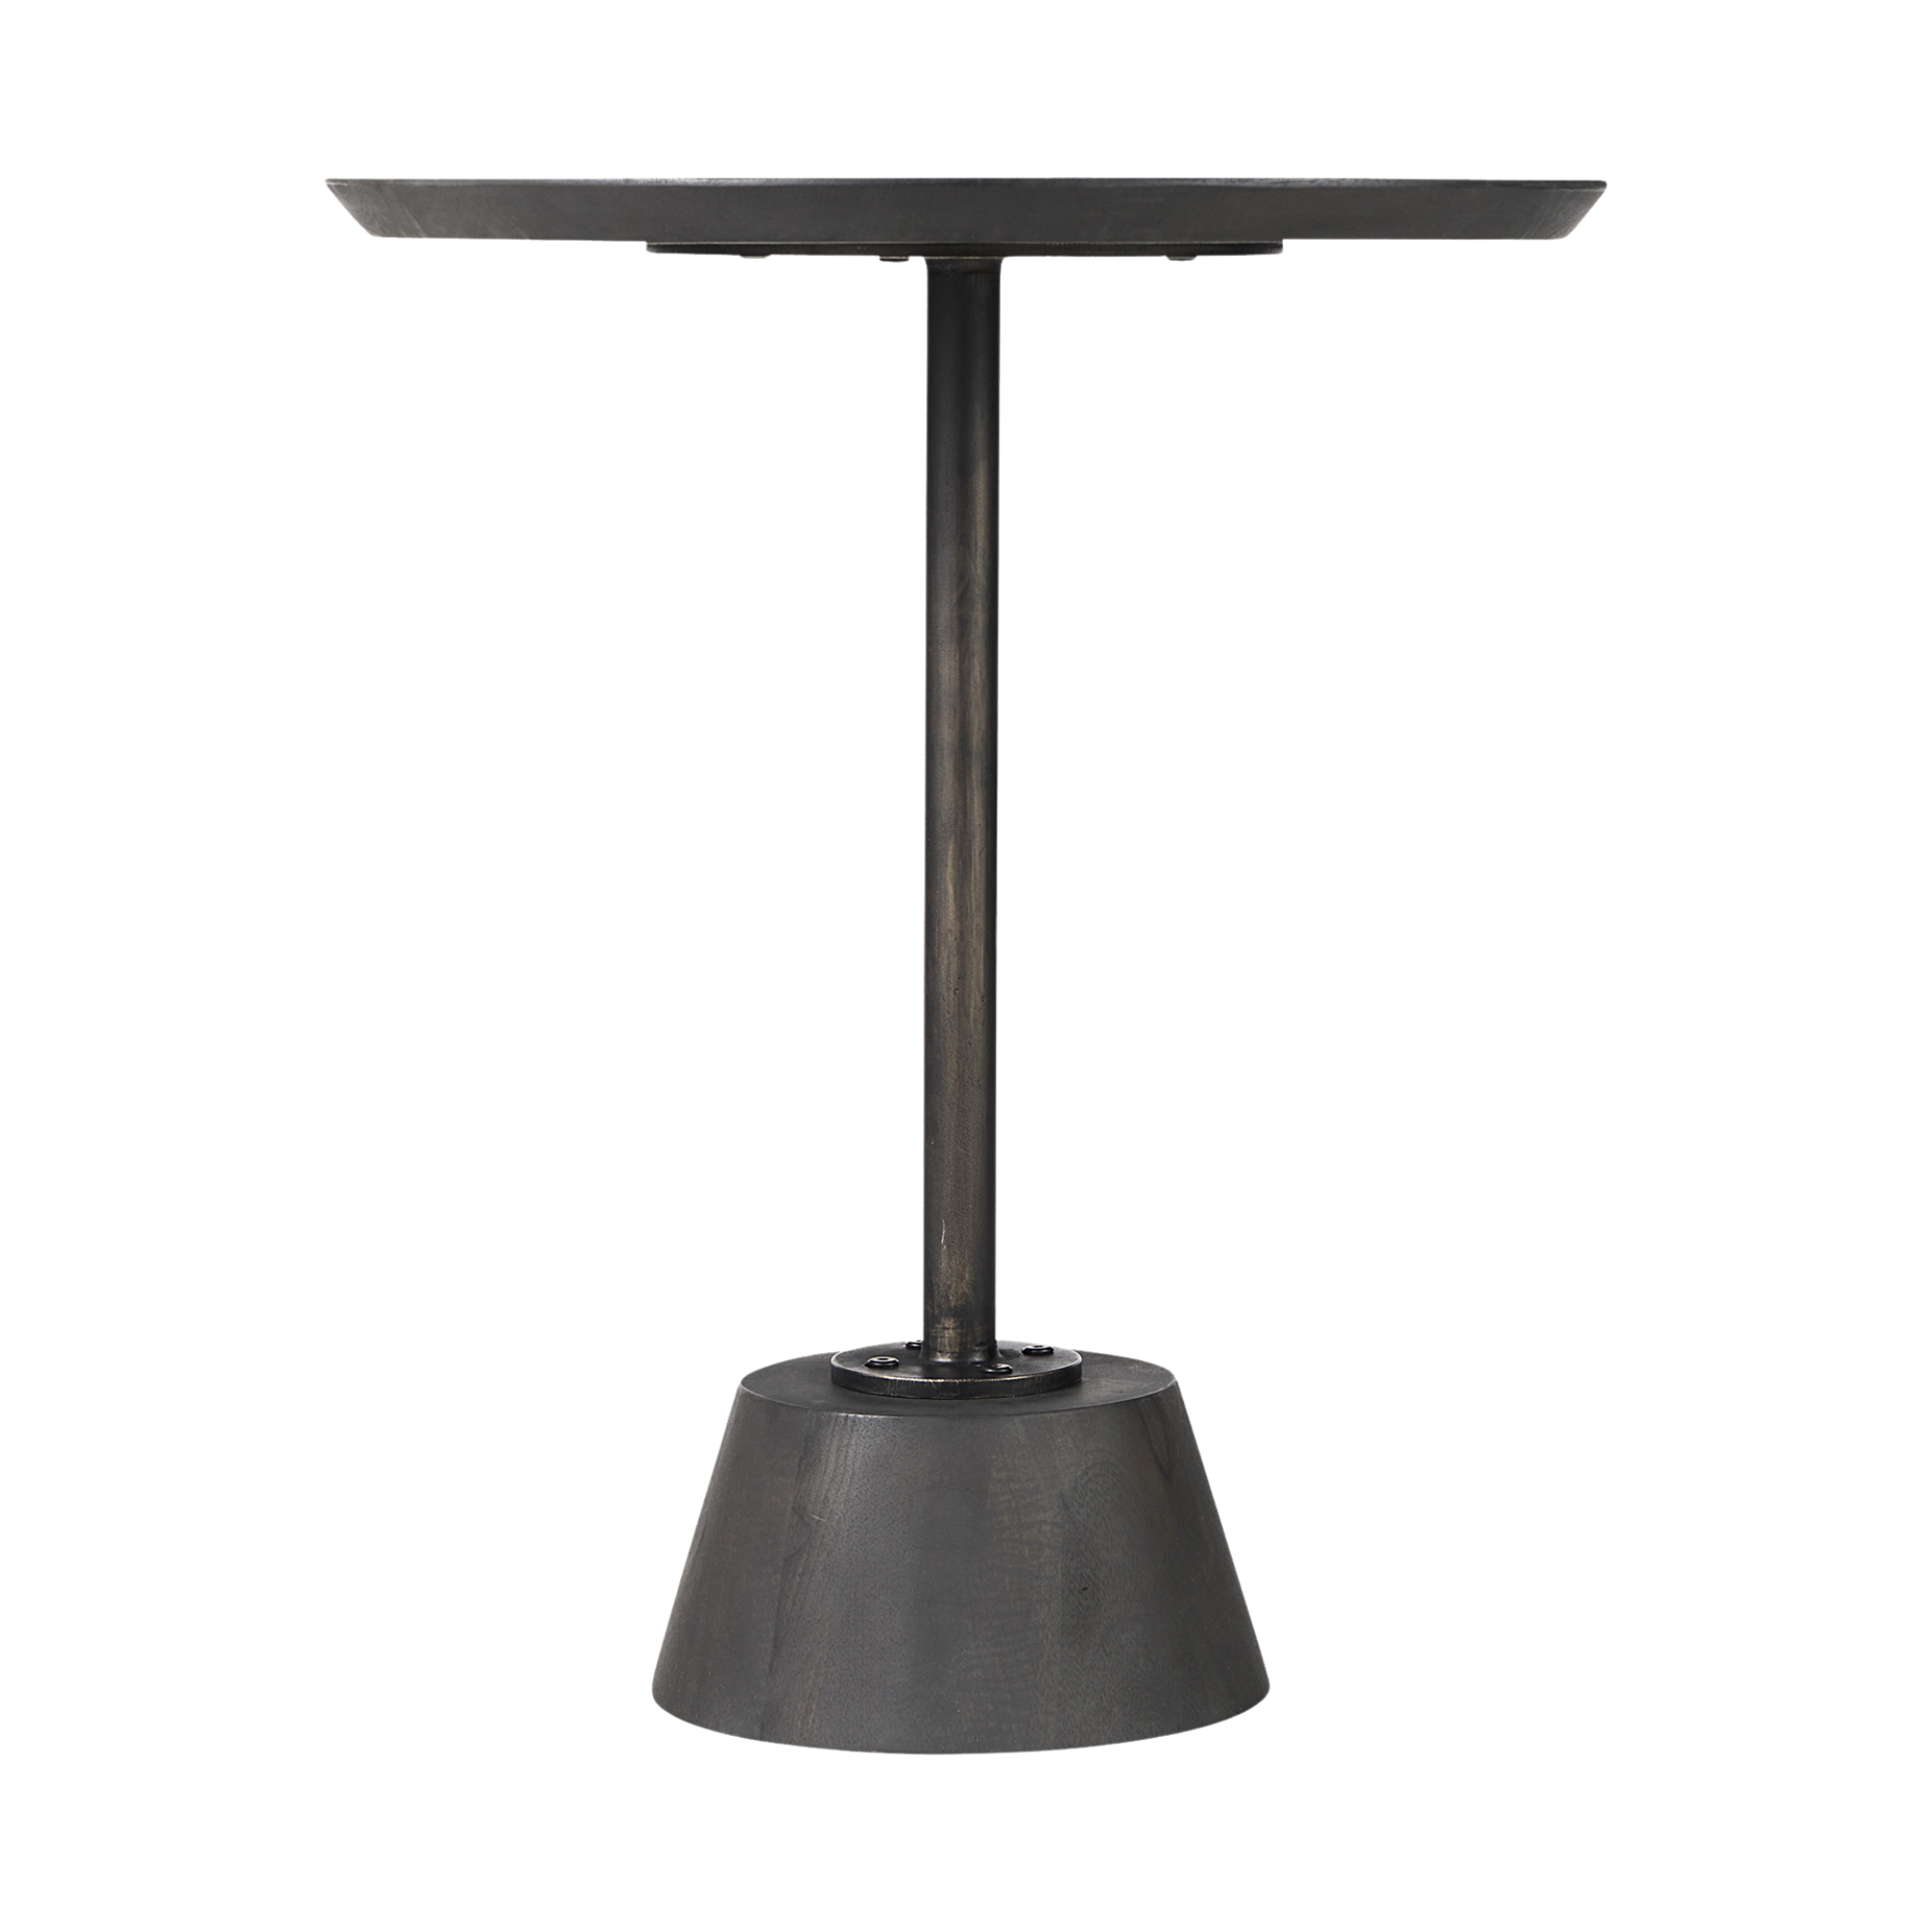 Margot Pedestal Table - Charcoal